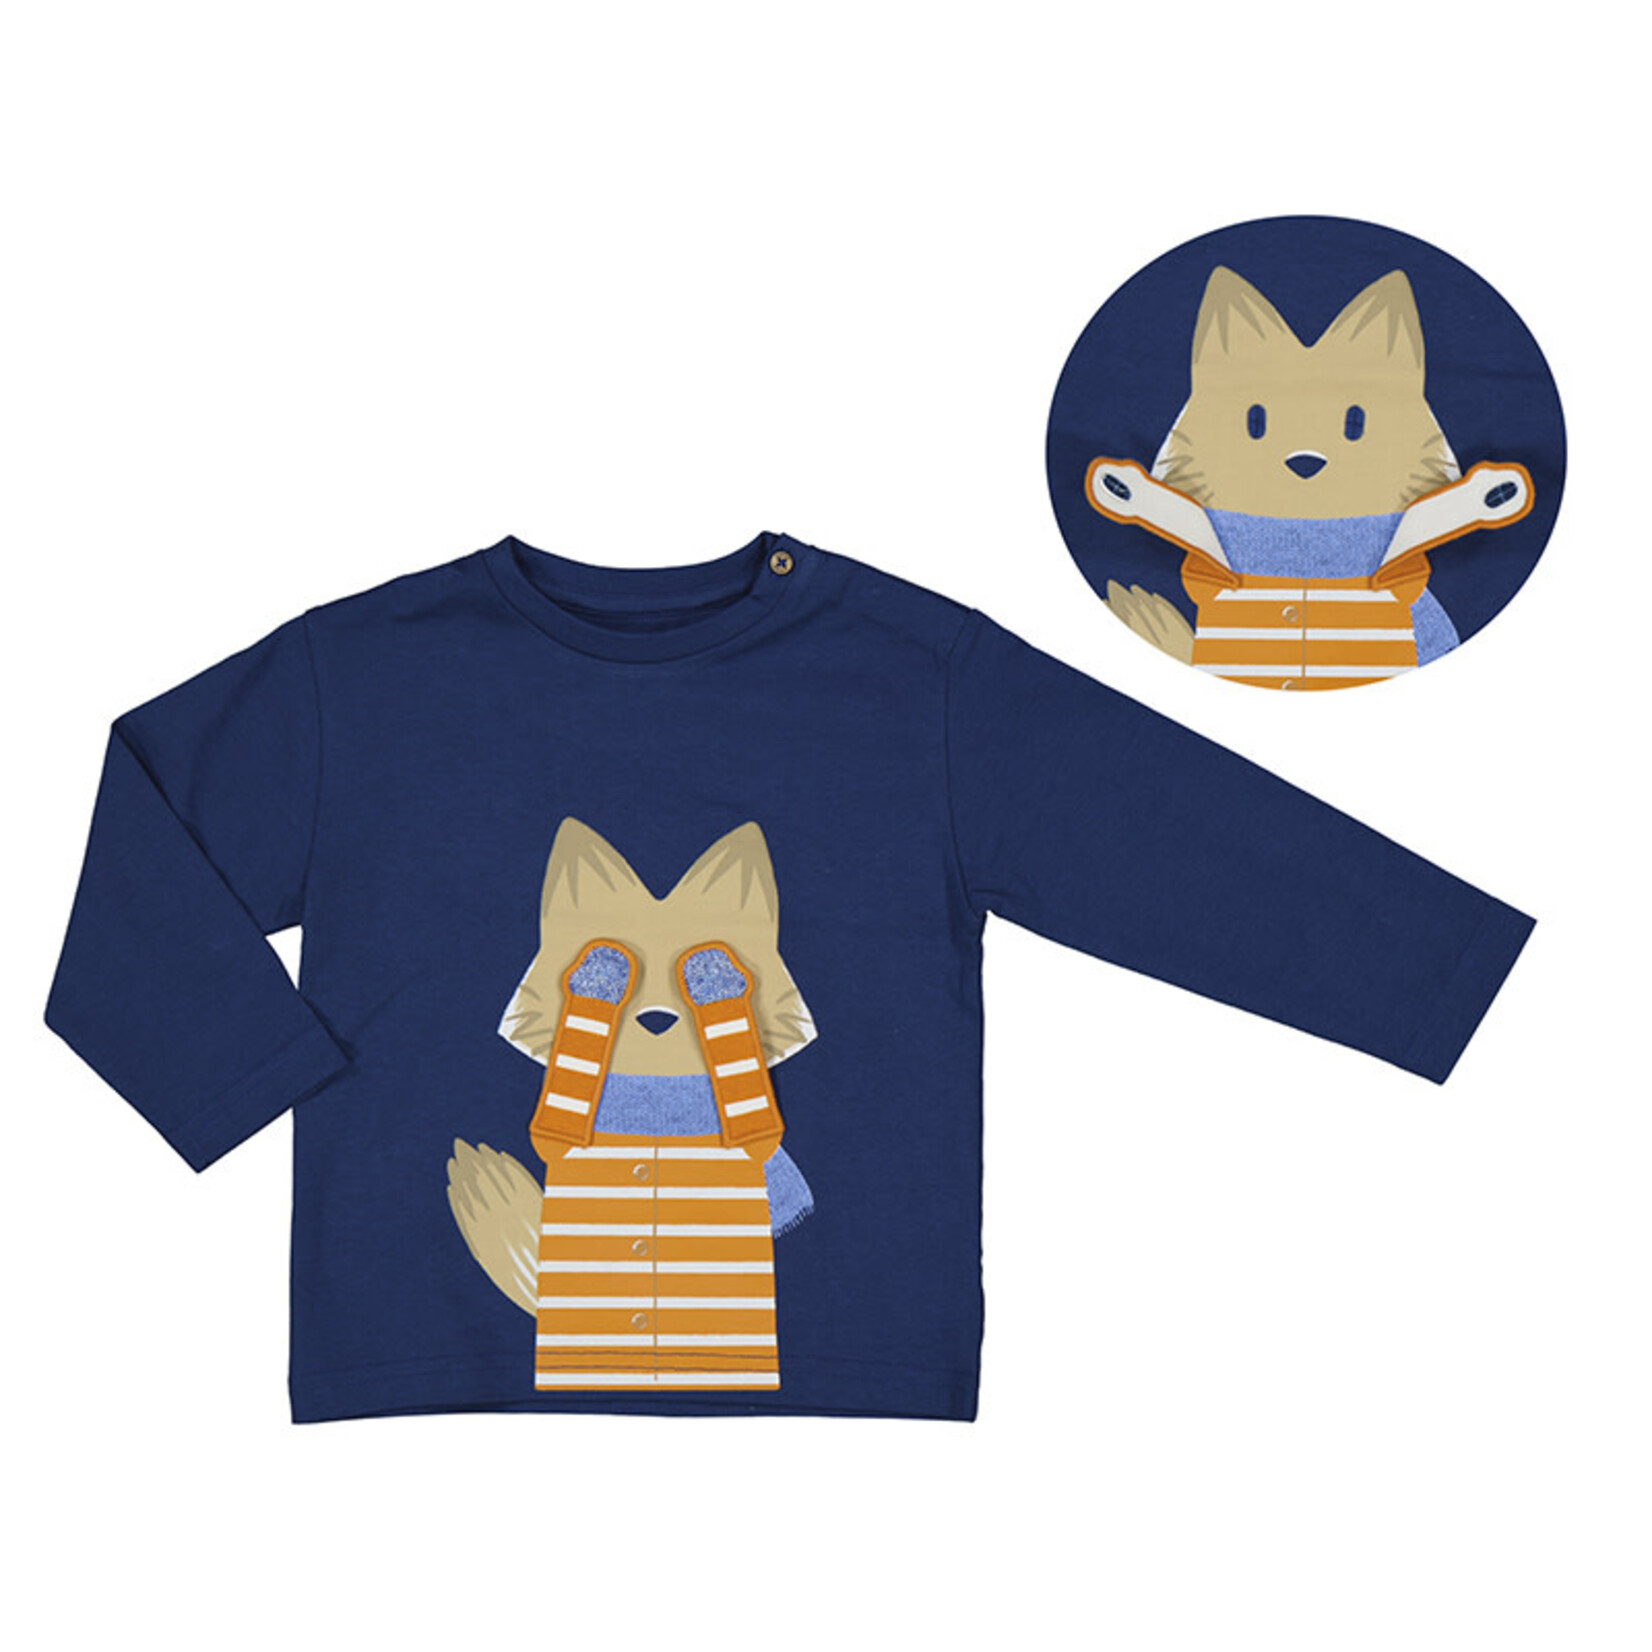 Mayoral Mayoral - L/S Fox Shirt